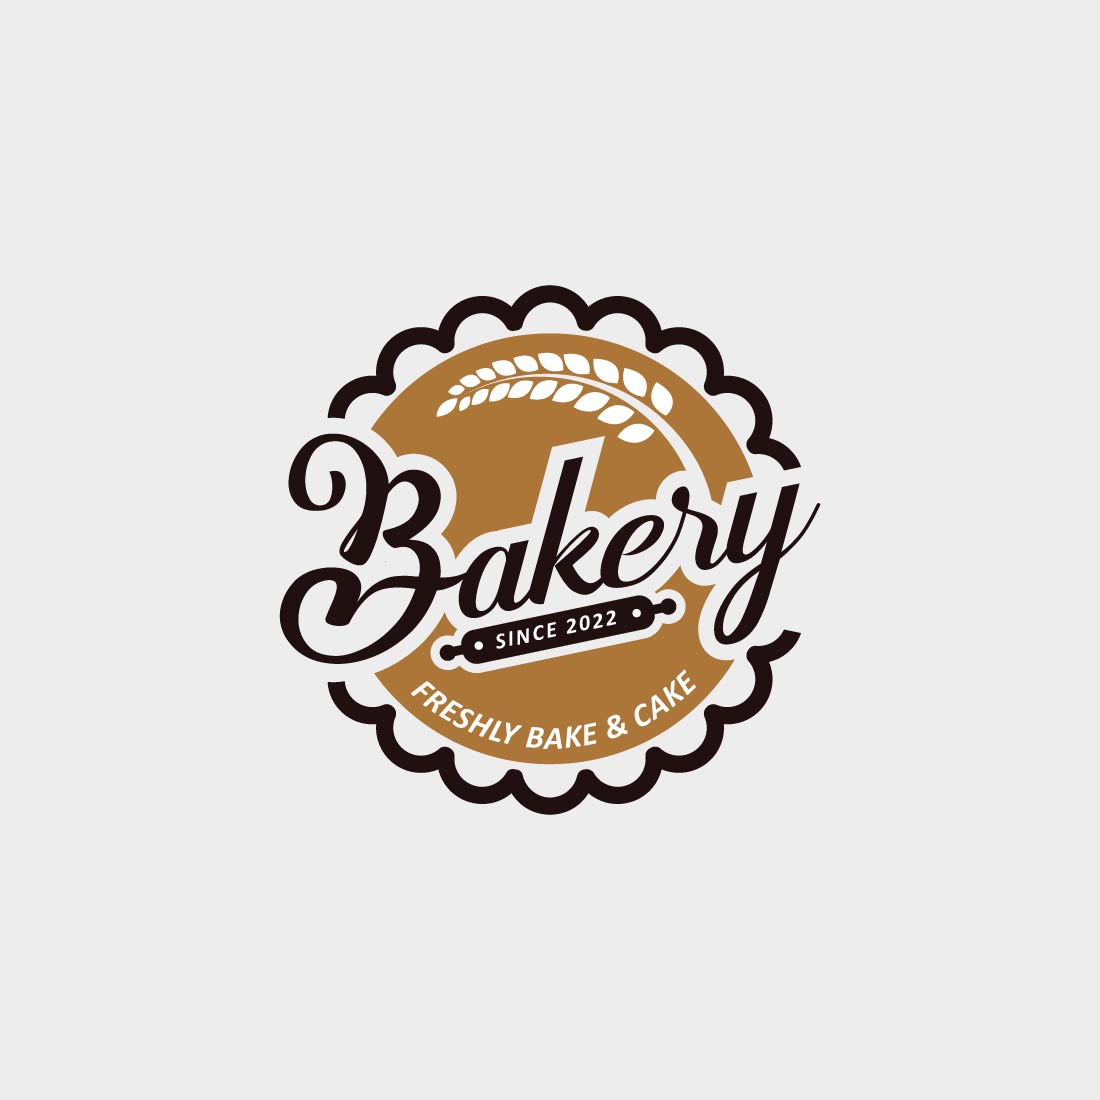 Bakery Logo Design Template cover image.